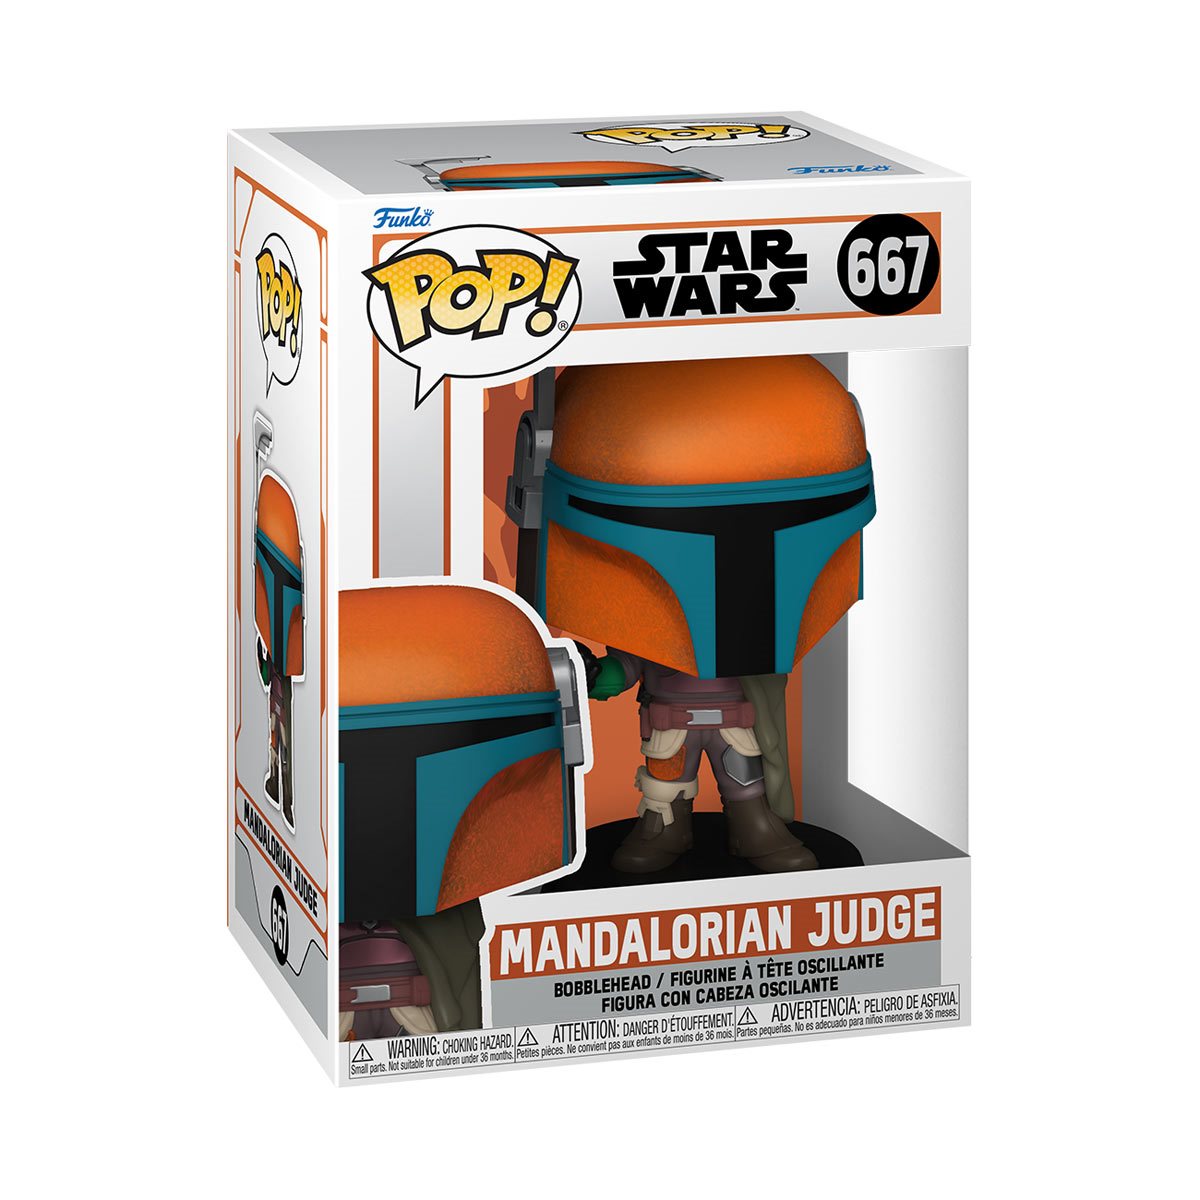 Star Wars: The Mandalorian Judge Vinyl Figure By Funko Pop!